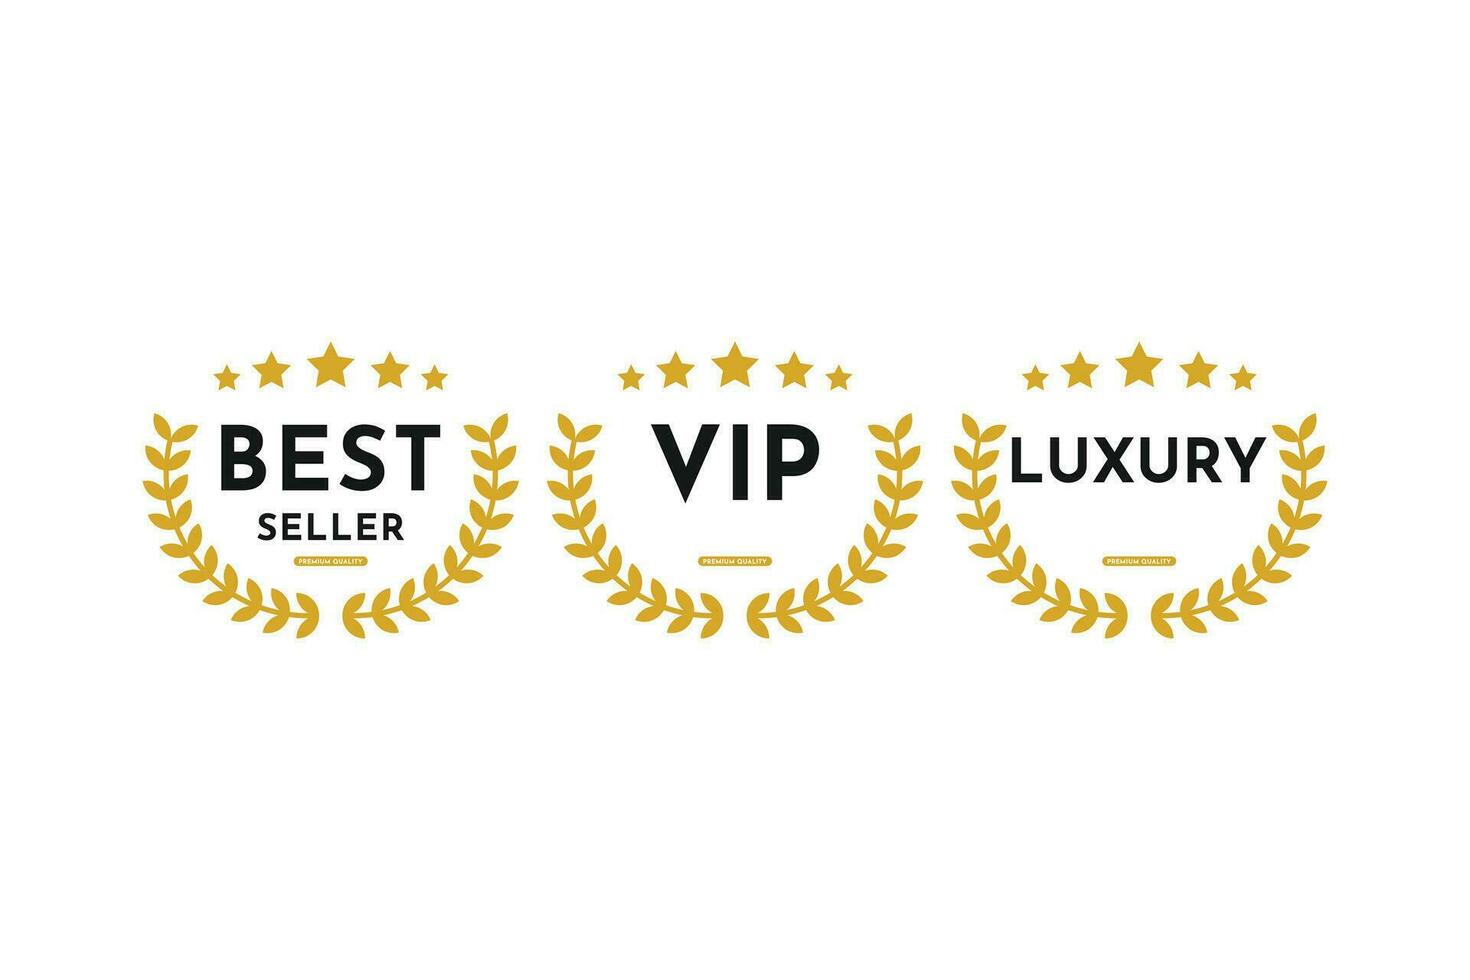 Best seller badge logo design template, vip logo design and luxury logo  design template 27859515 Vector Art at Vecteezy